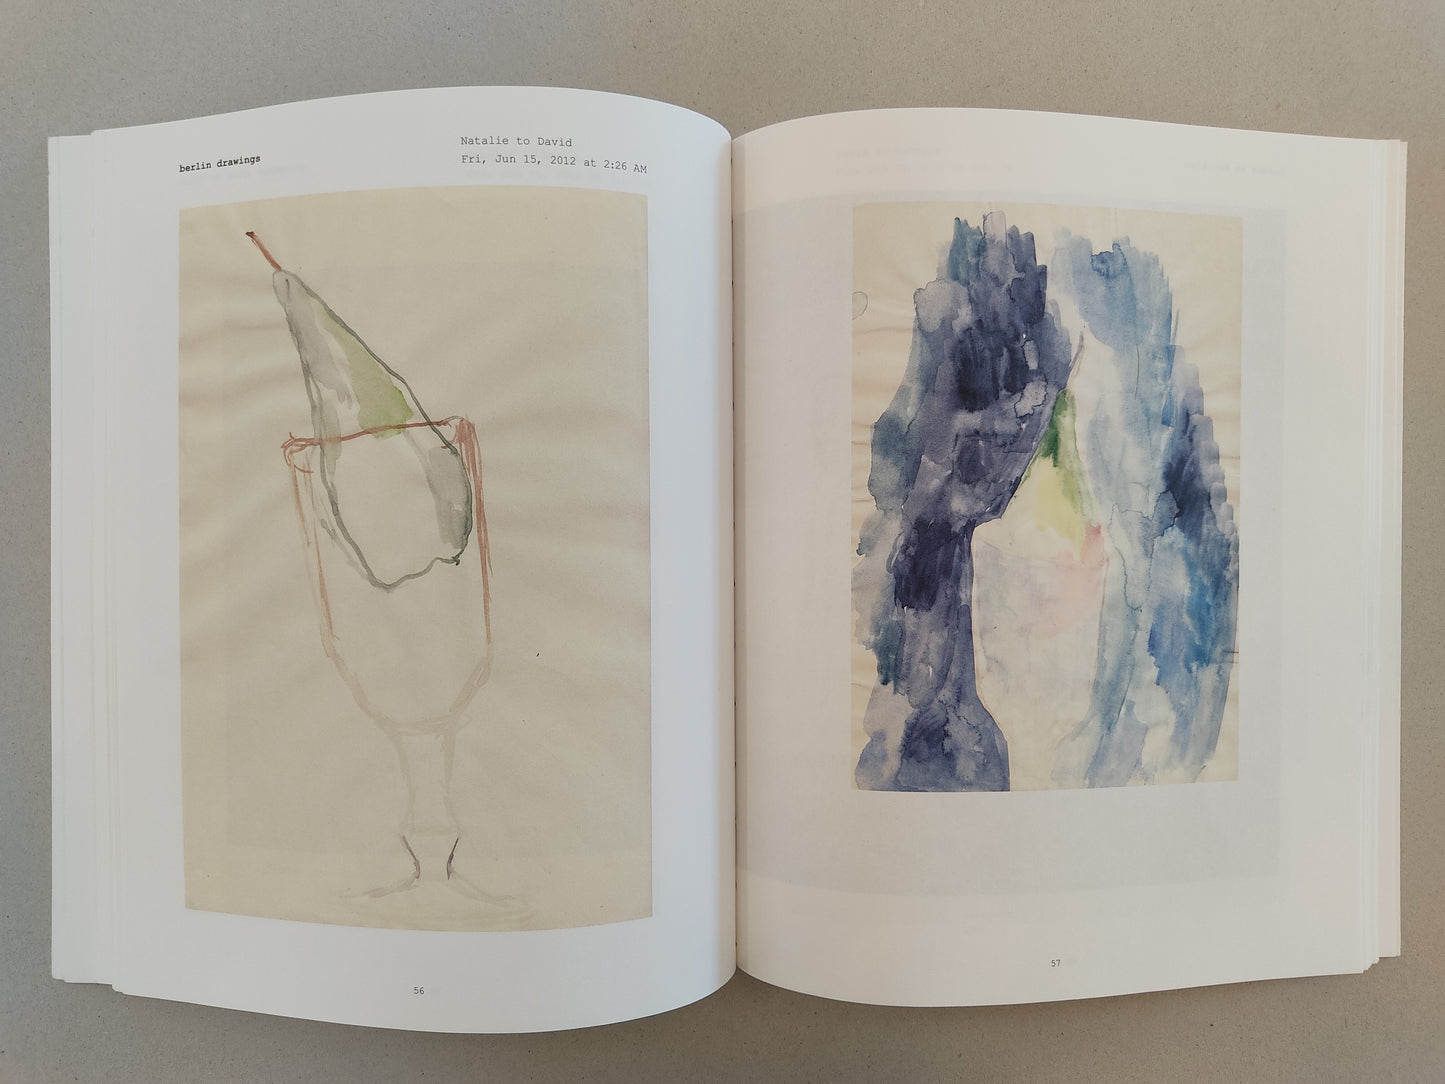 Watercolors (book) - Natalie Häusler, David Horvitz